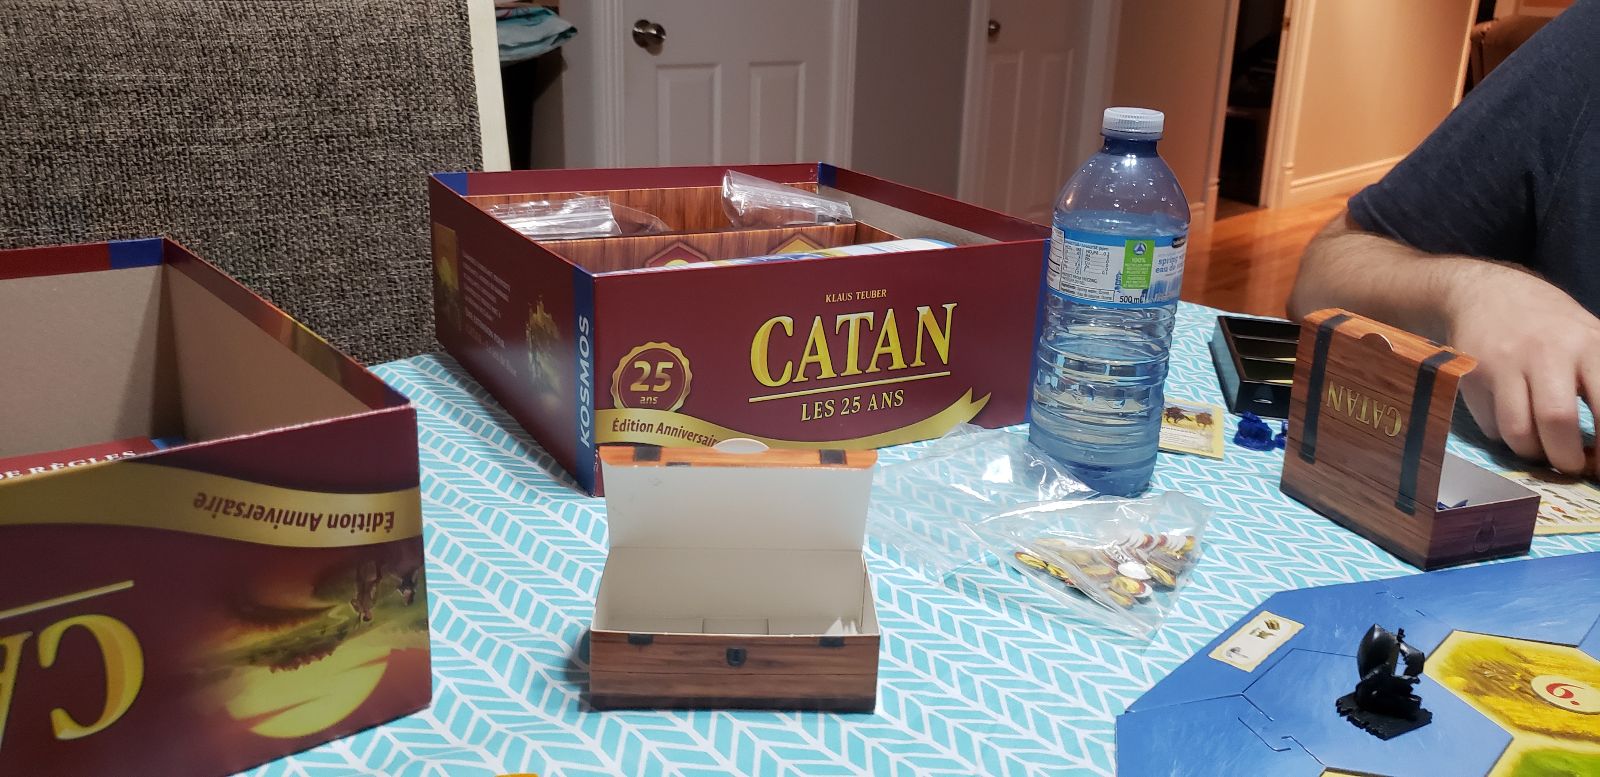 25 Year Anniversary Edition Box of Catan Board Game.